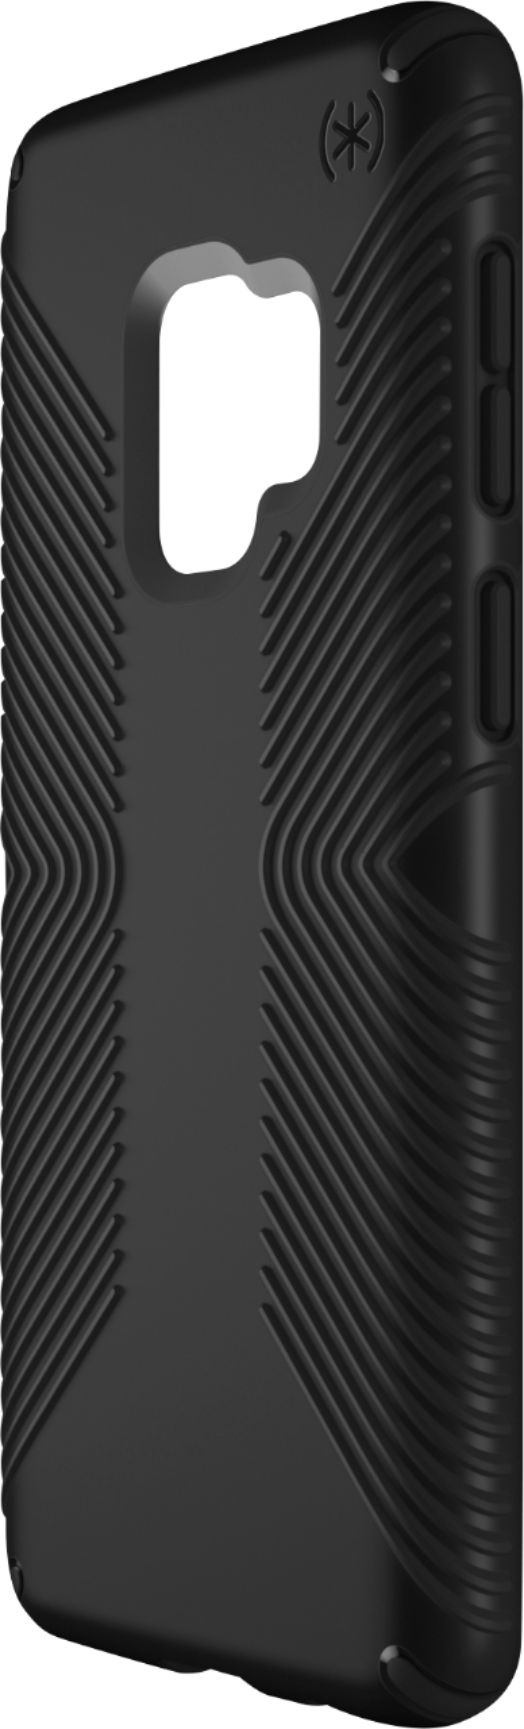 Speck - Presidio Grip Case for Samsung Galaxy S9 - Black